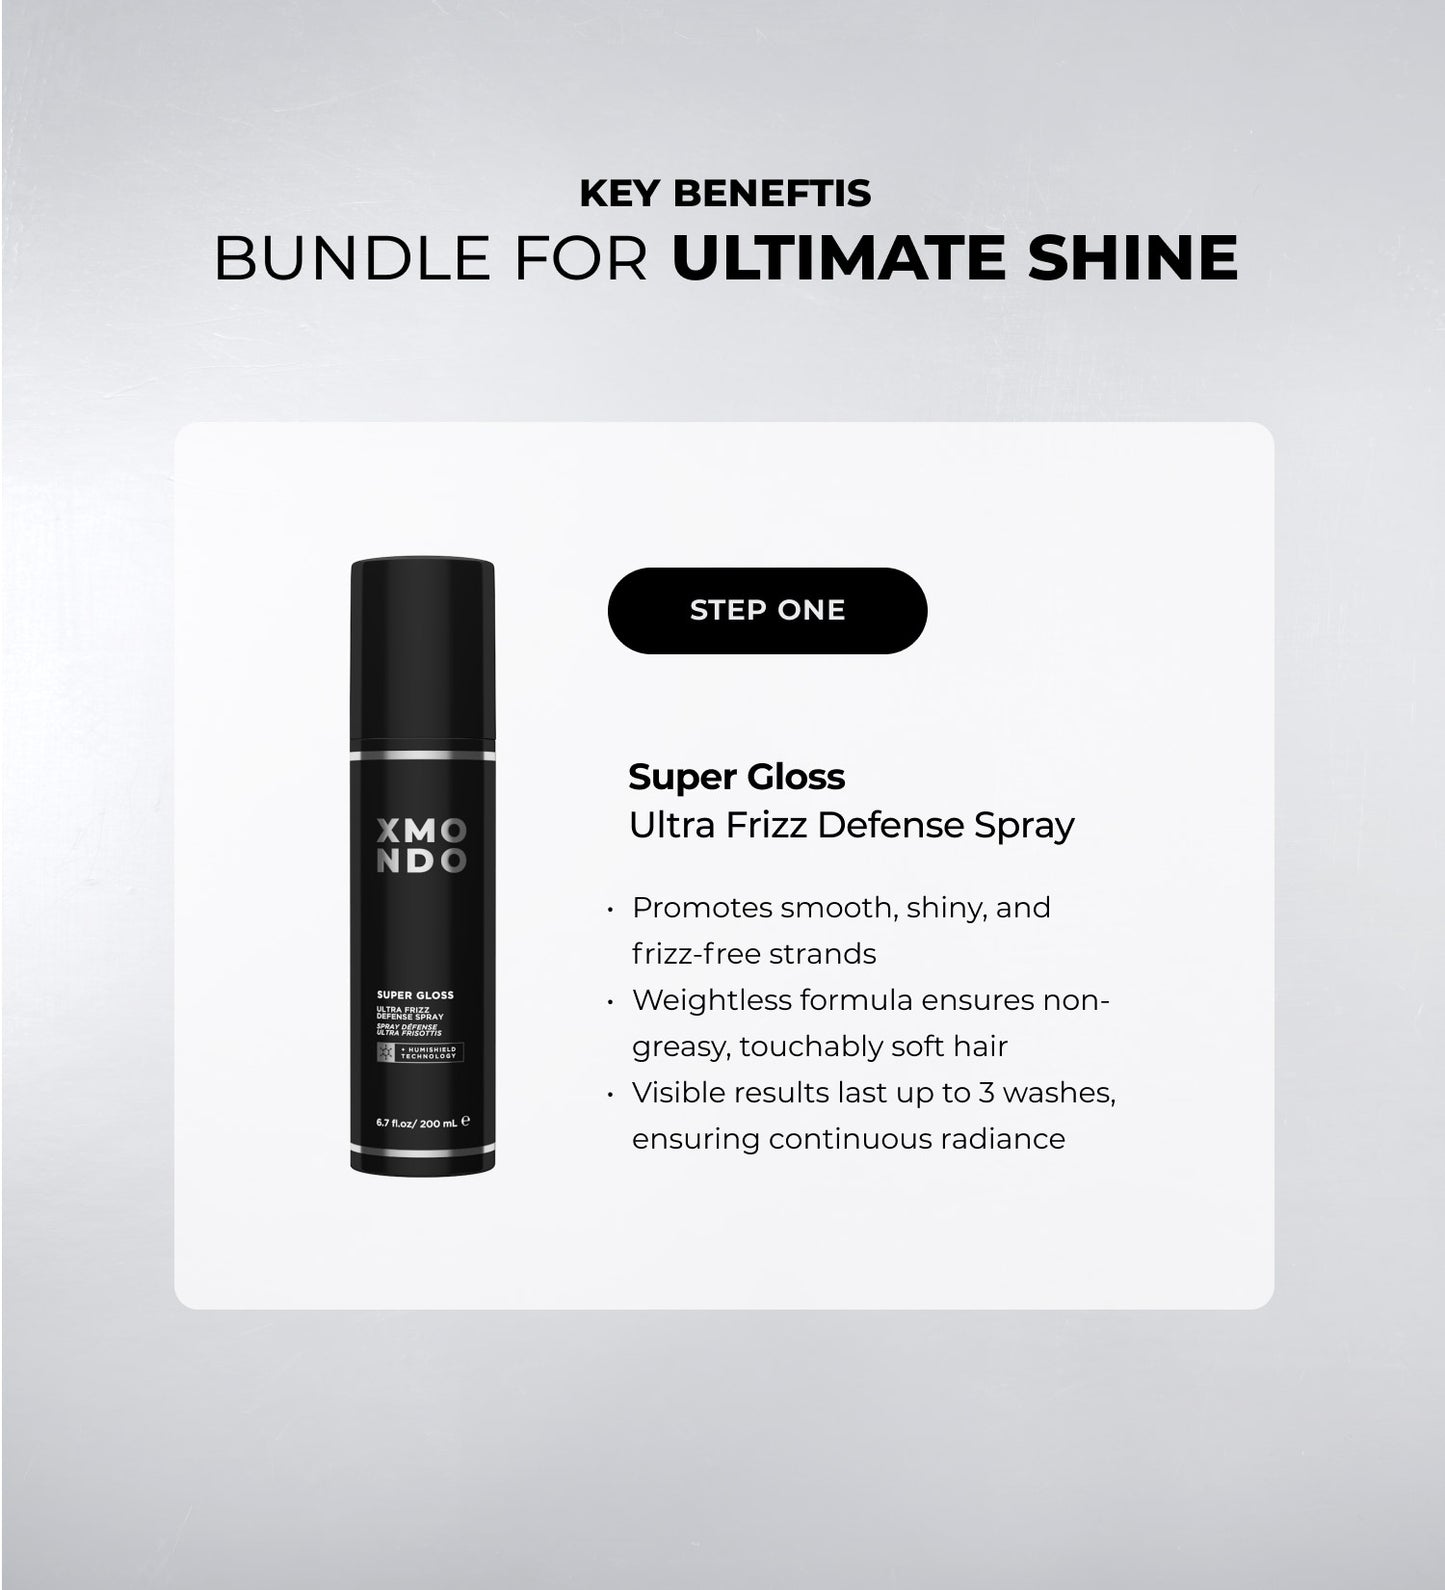 Bundle for Ultimate Shine